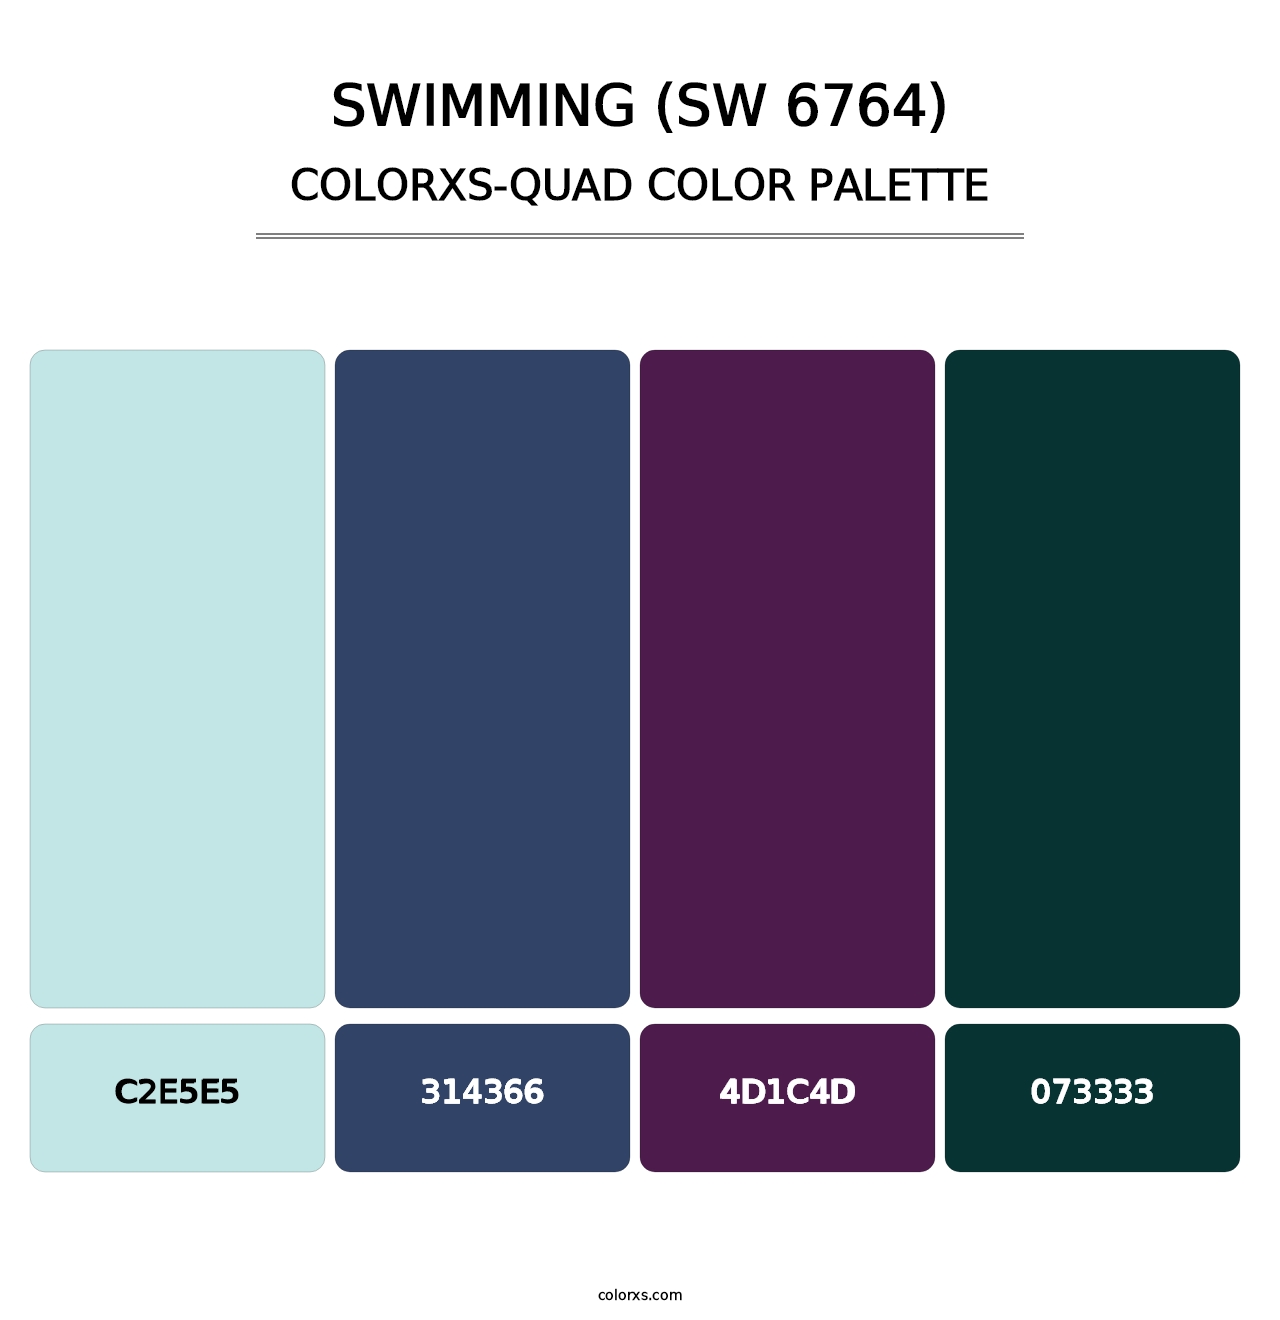 Swimming (SW 6764) - Colorxs Quad Palette